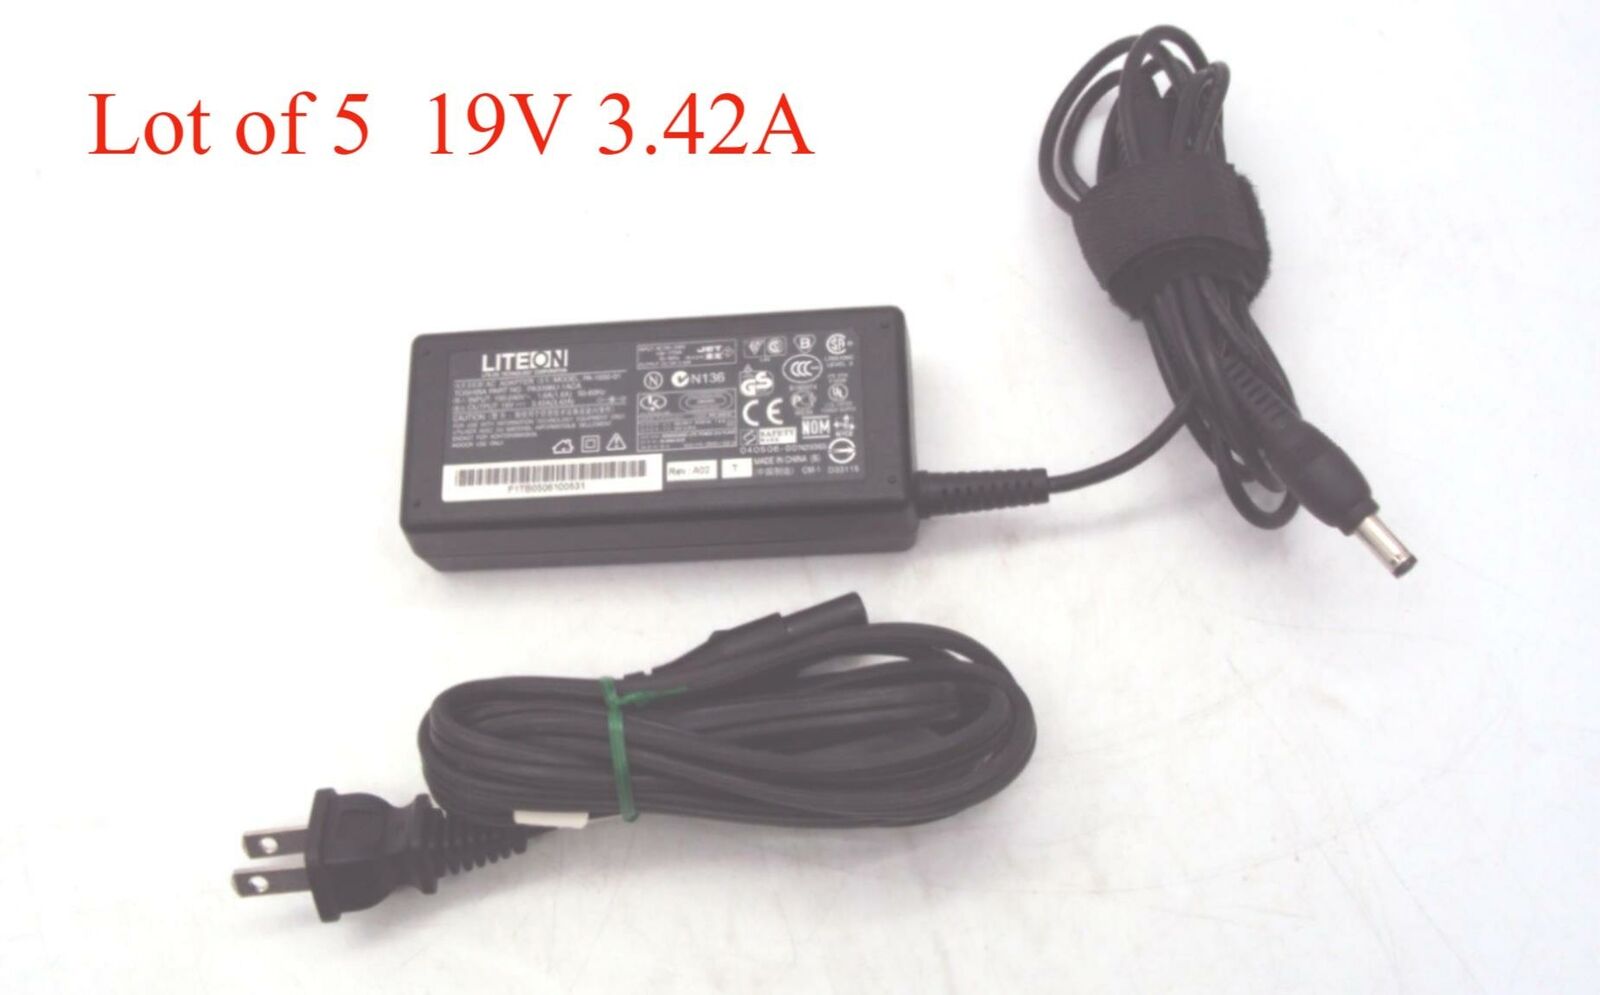 Lot of 5 LITEON PA-1650-02 PA-1650-68 19V 3.42A 5.5*2.5mm Power Supply Adapter